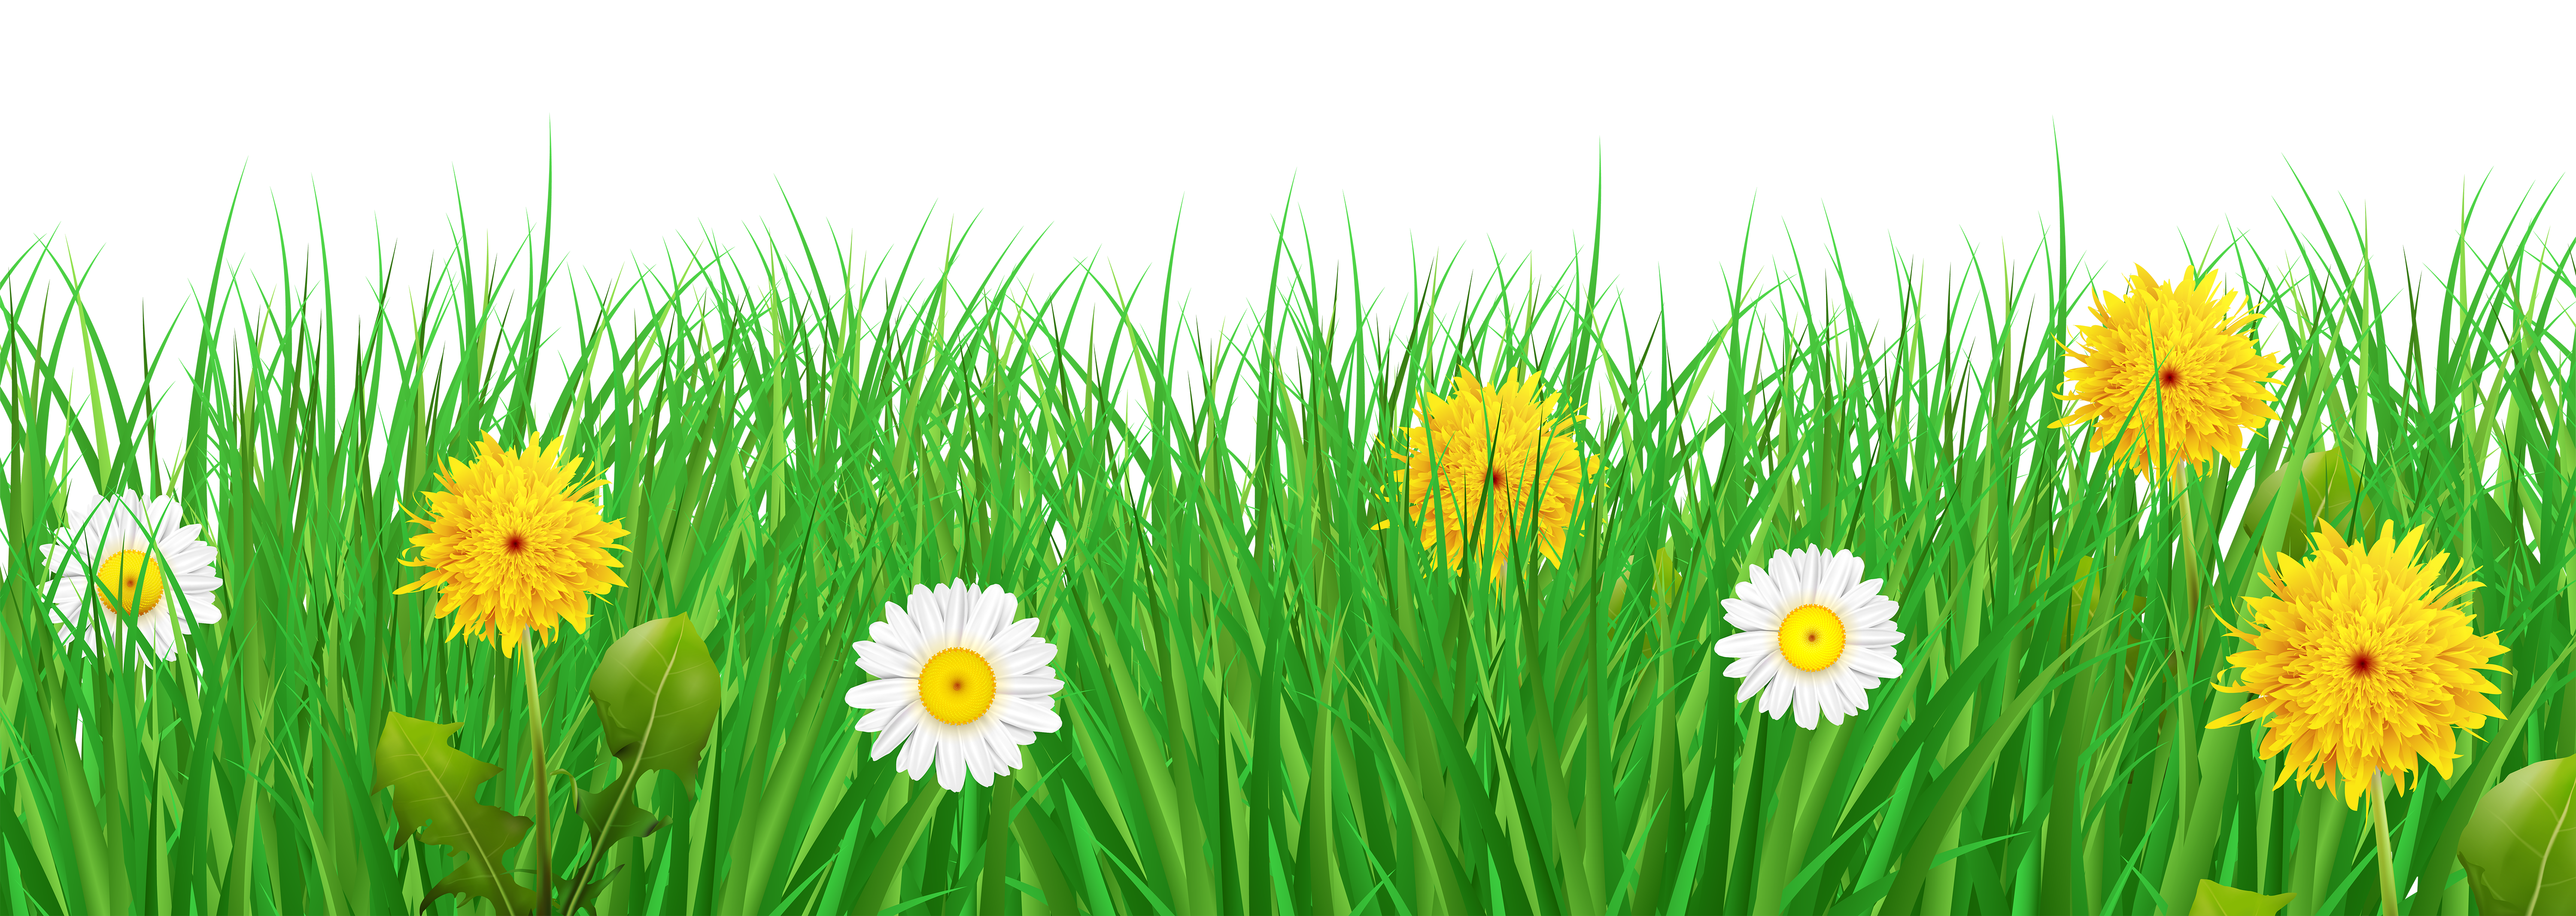 grass and flowers clip art